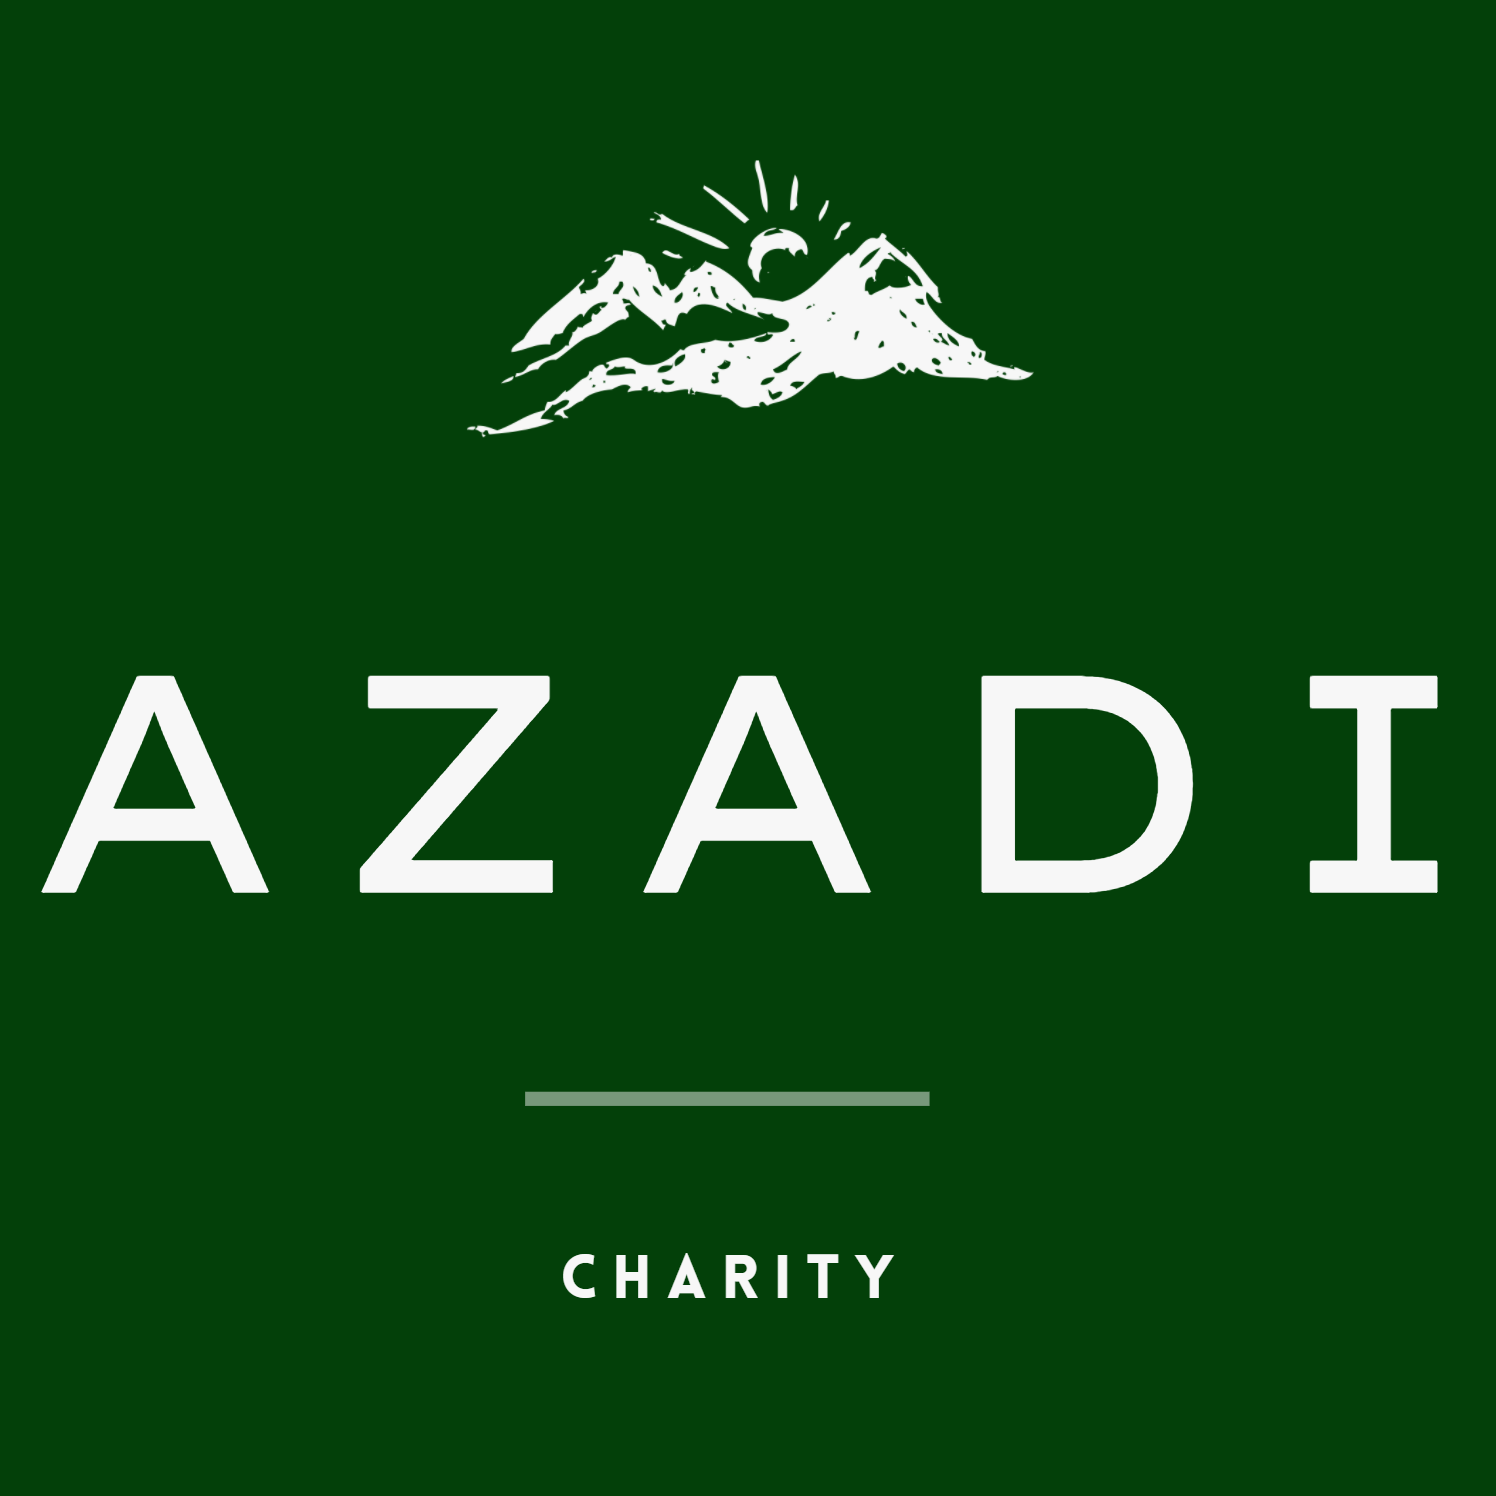 Jashn E Azadi Projects :: Photos, videos, logos, illustrations and branding  :: Behance